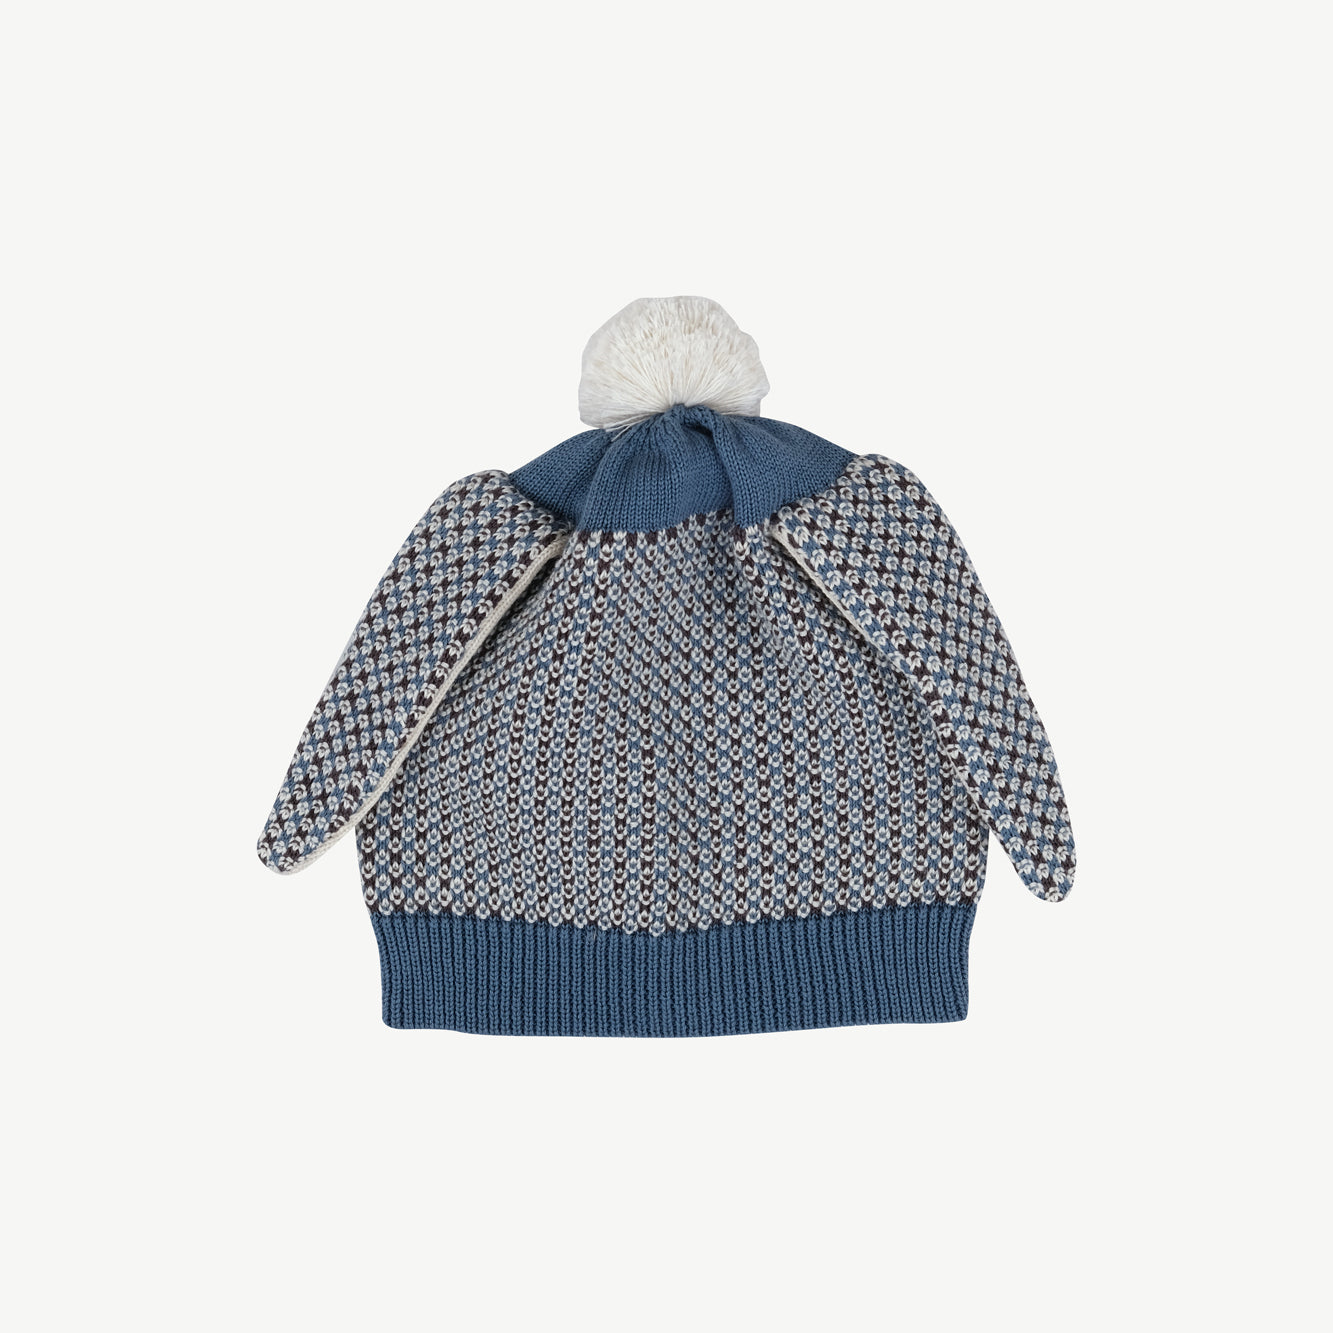 'multi' blue mirage knit bunny baby beanie